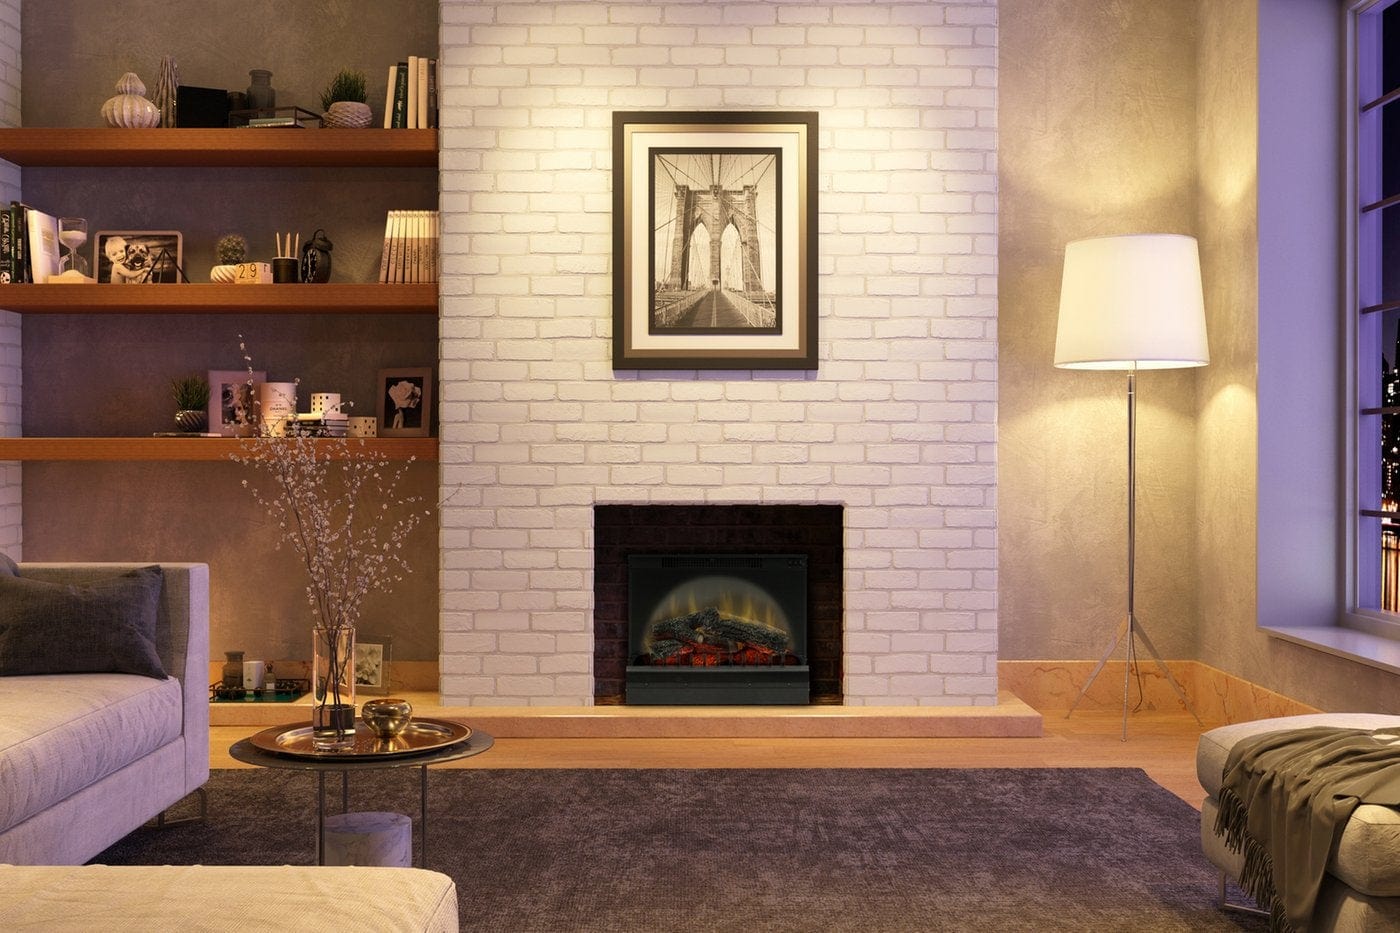 StarWood Fireplaces - Dimplex Standard 23 Log Set Electric Fireplace Insert -